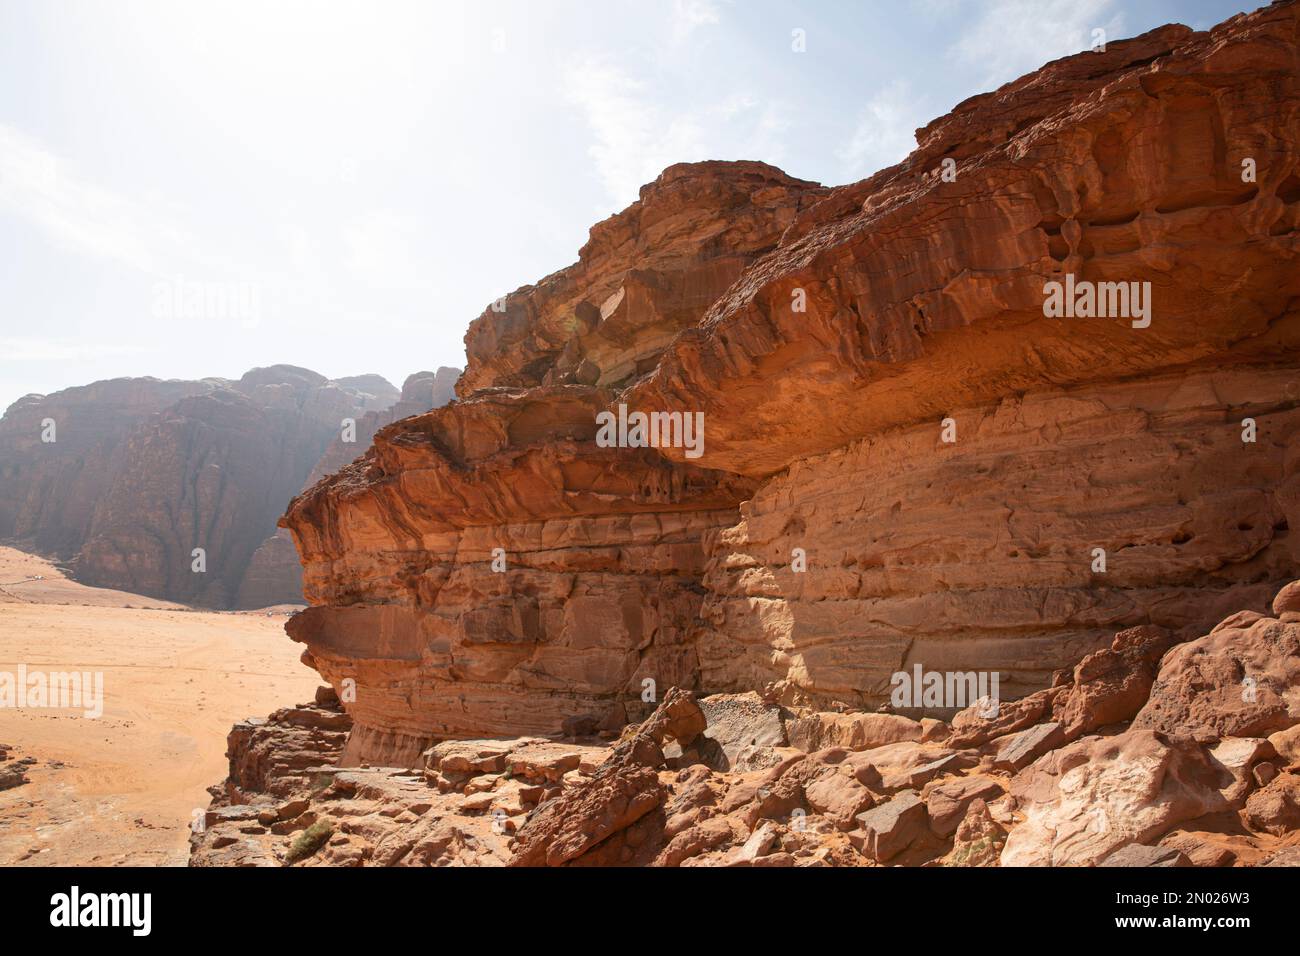 Wadi Rum desert in Jordan. Beautiful mountains rocky landscape and sand. Stock Photo